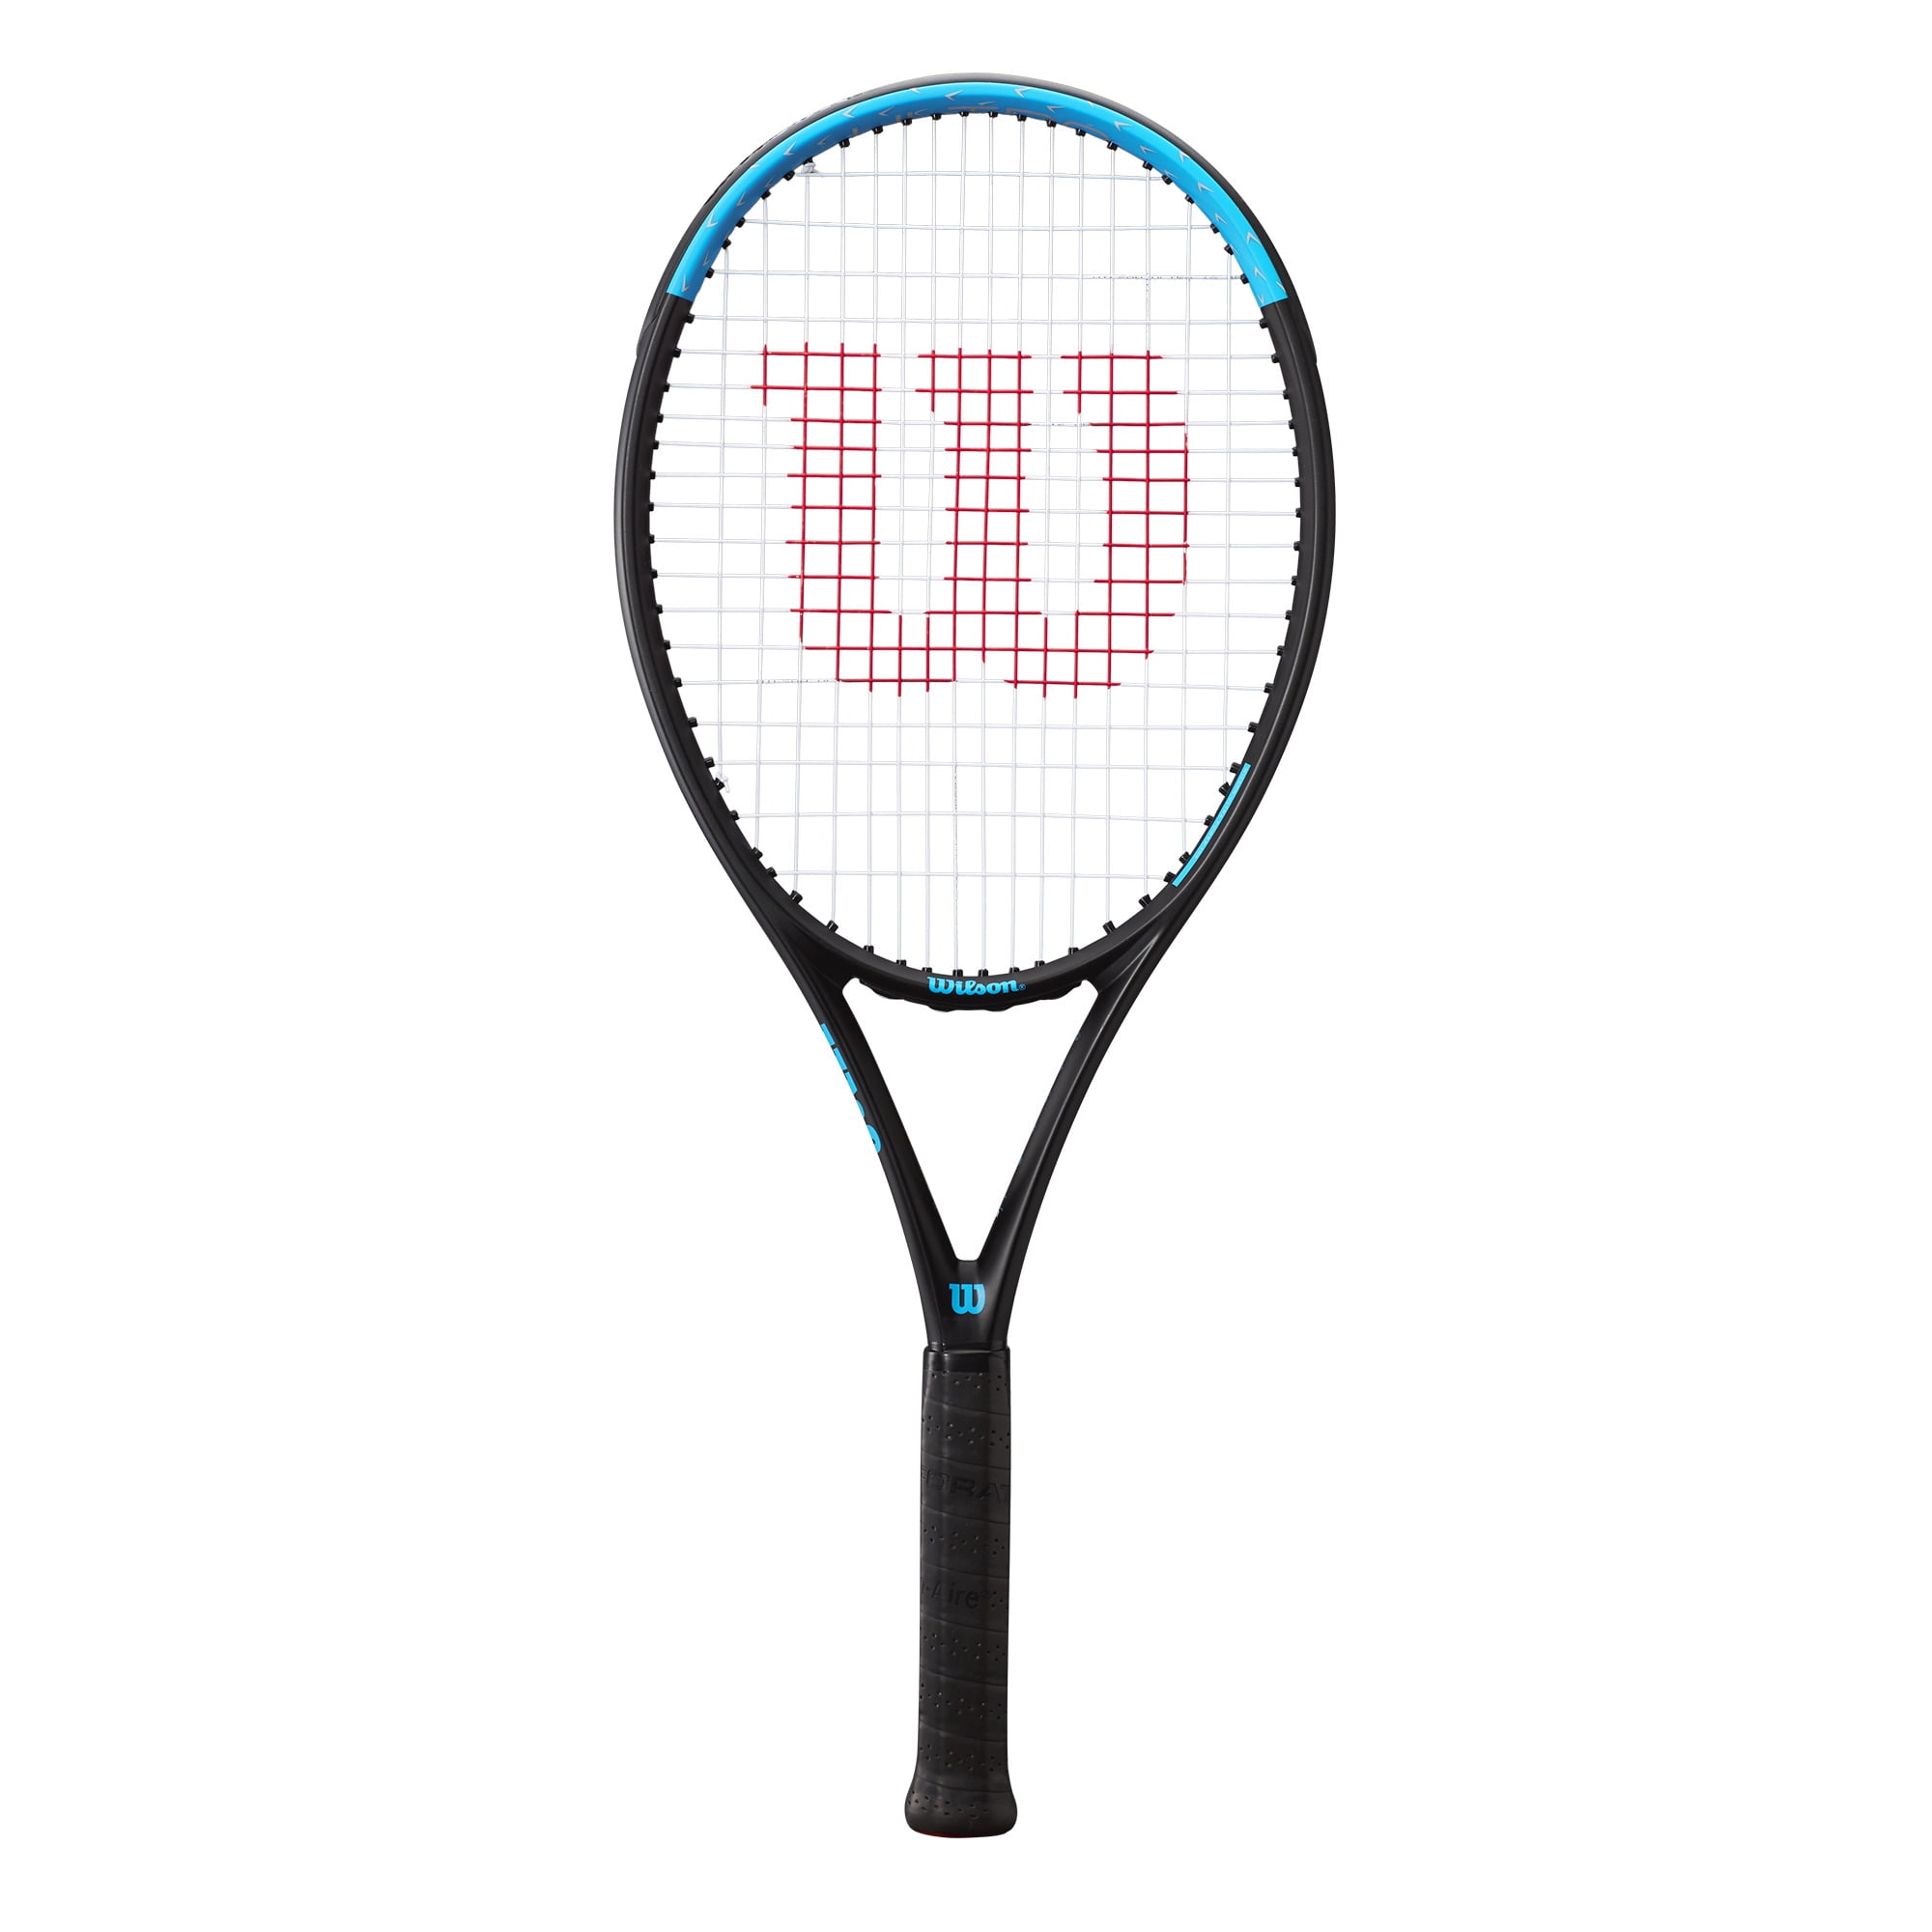 Wilson Hammer Pro Squash 3 Squash Balls Sporting Equipment Use Value Racket 